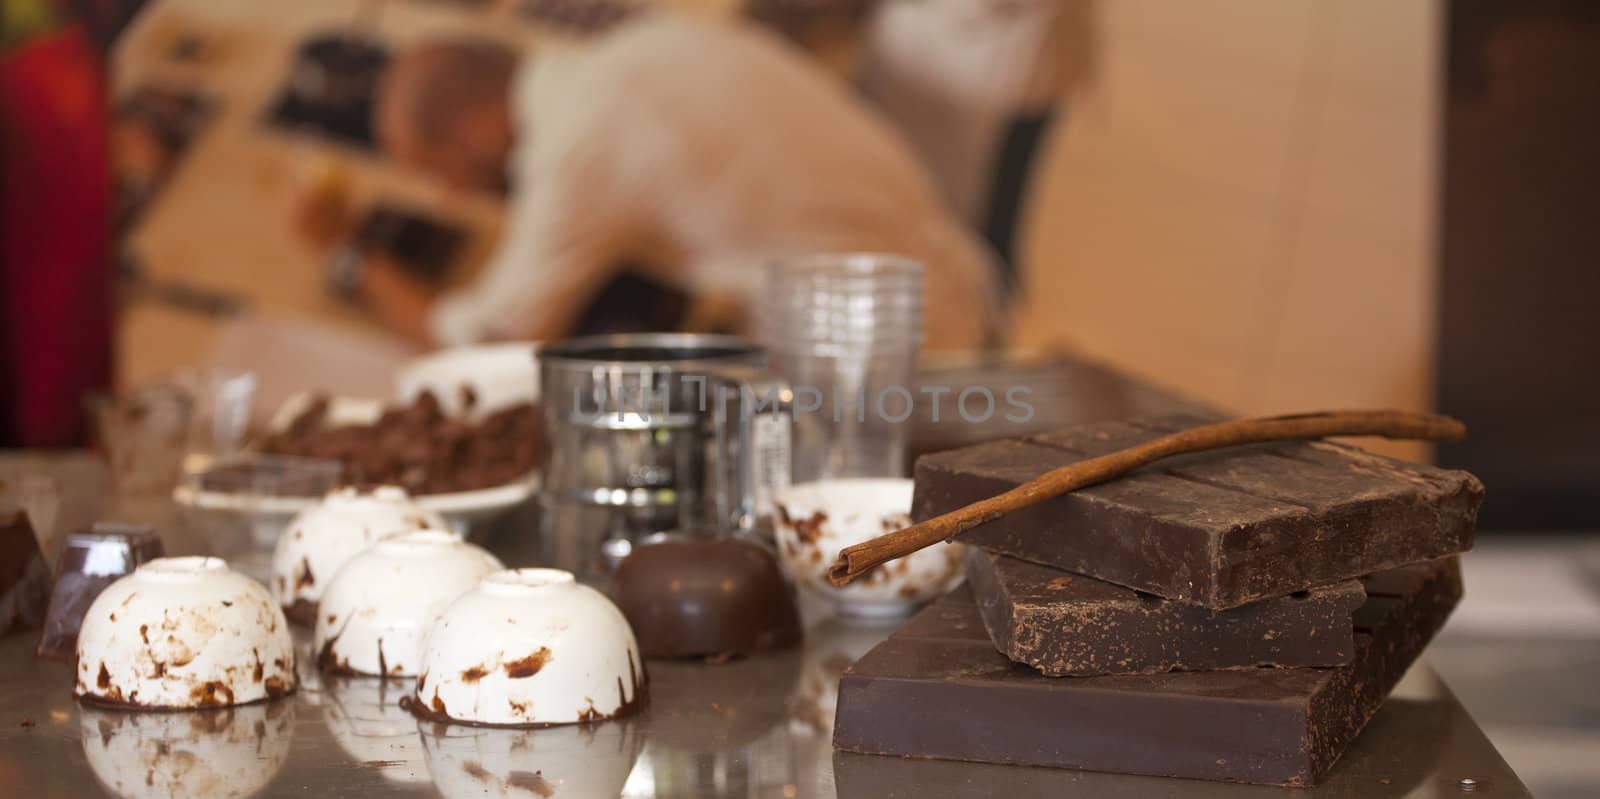 Chocolate and cinnamon on the table